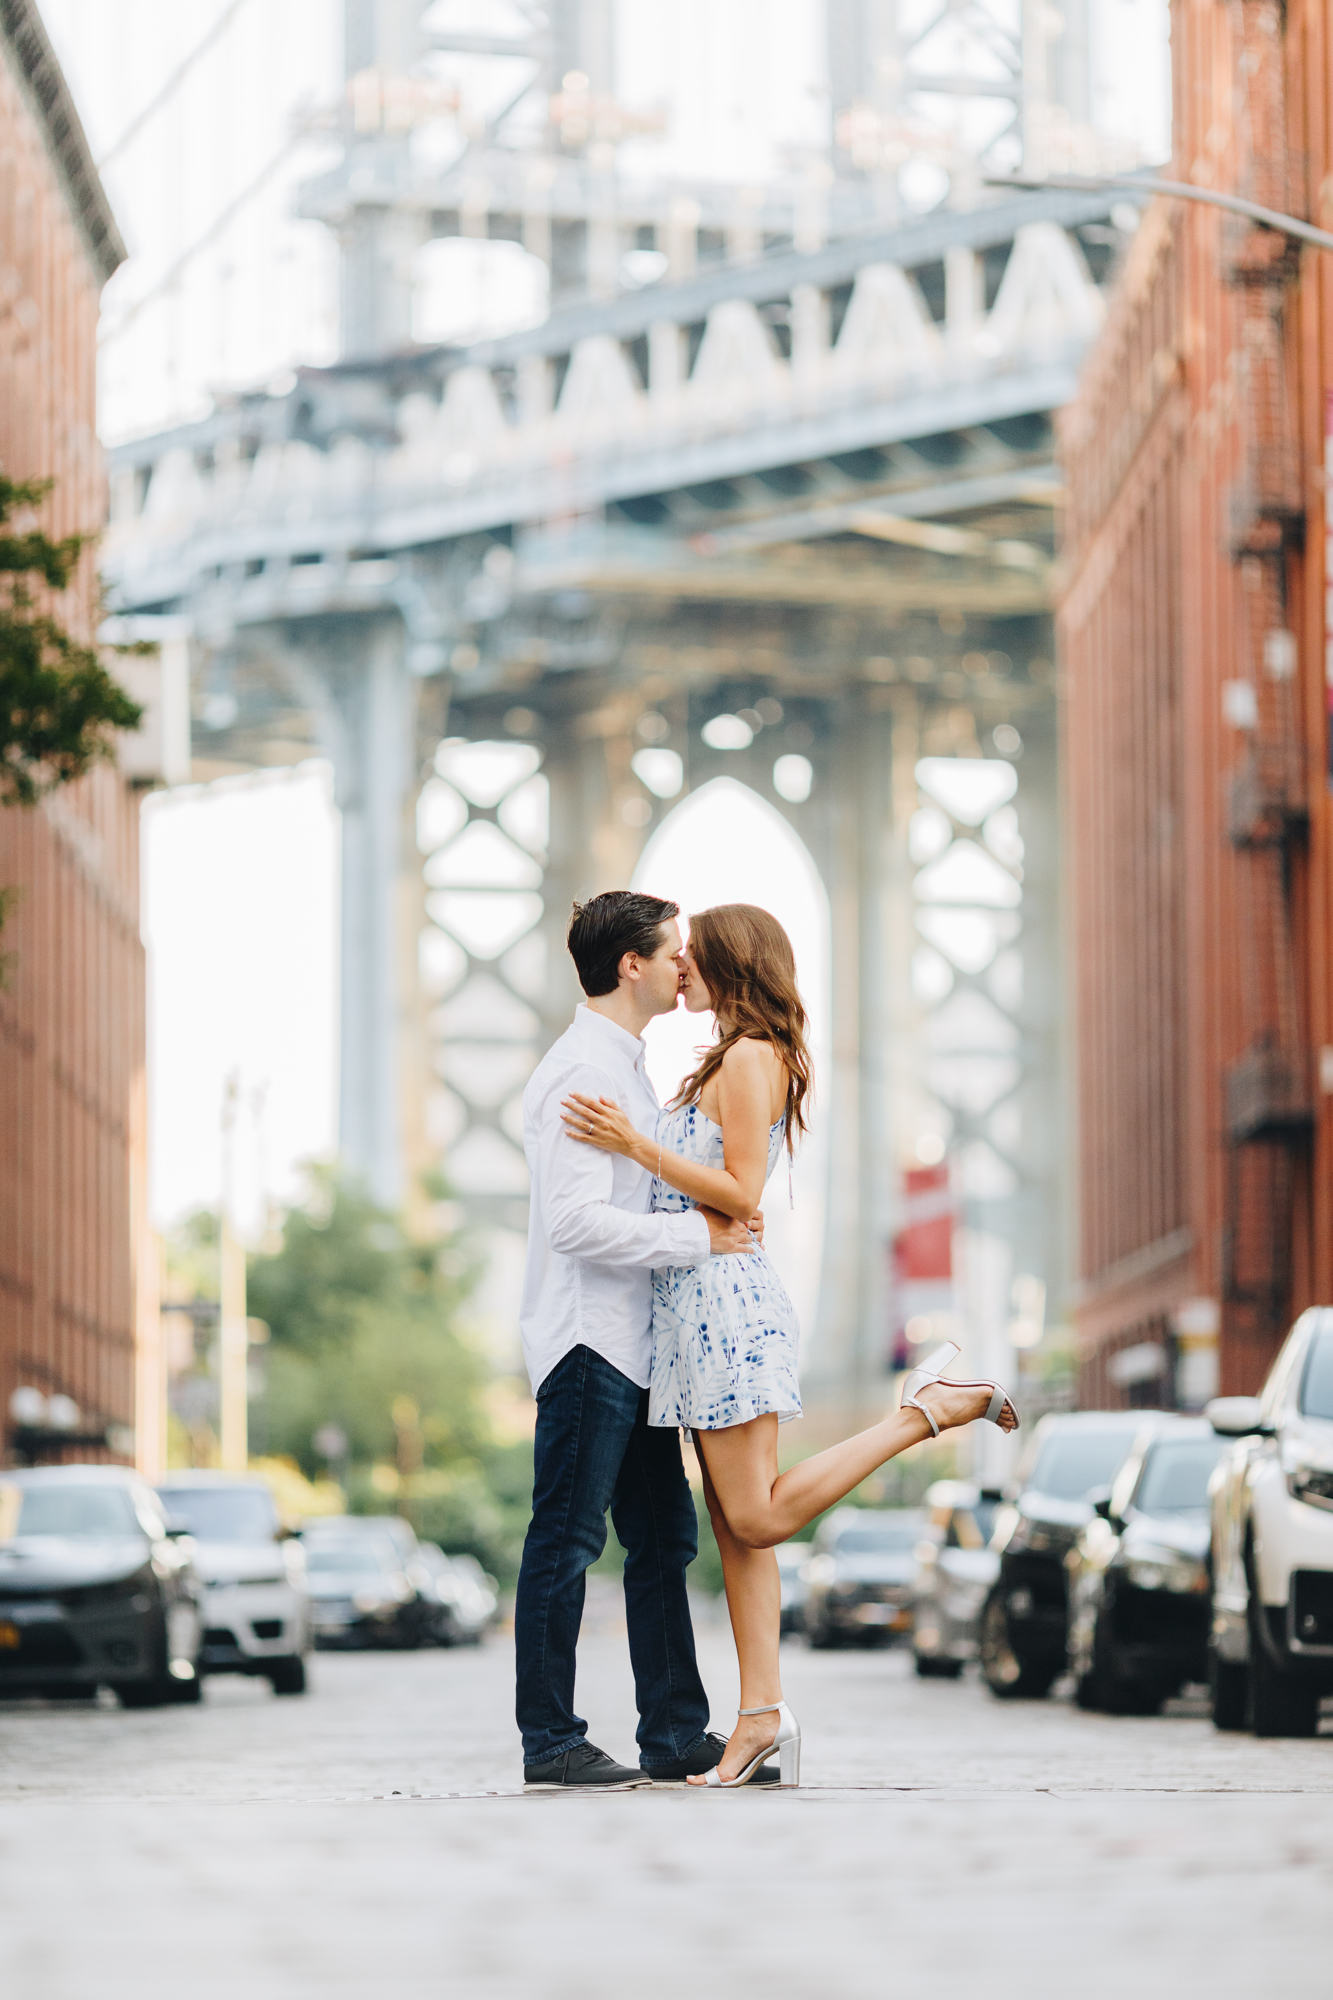 Dreamy Brooklyn Bridge Engagement Photos